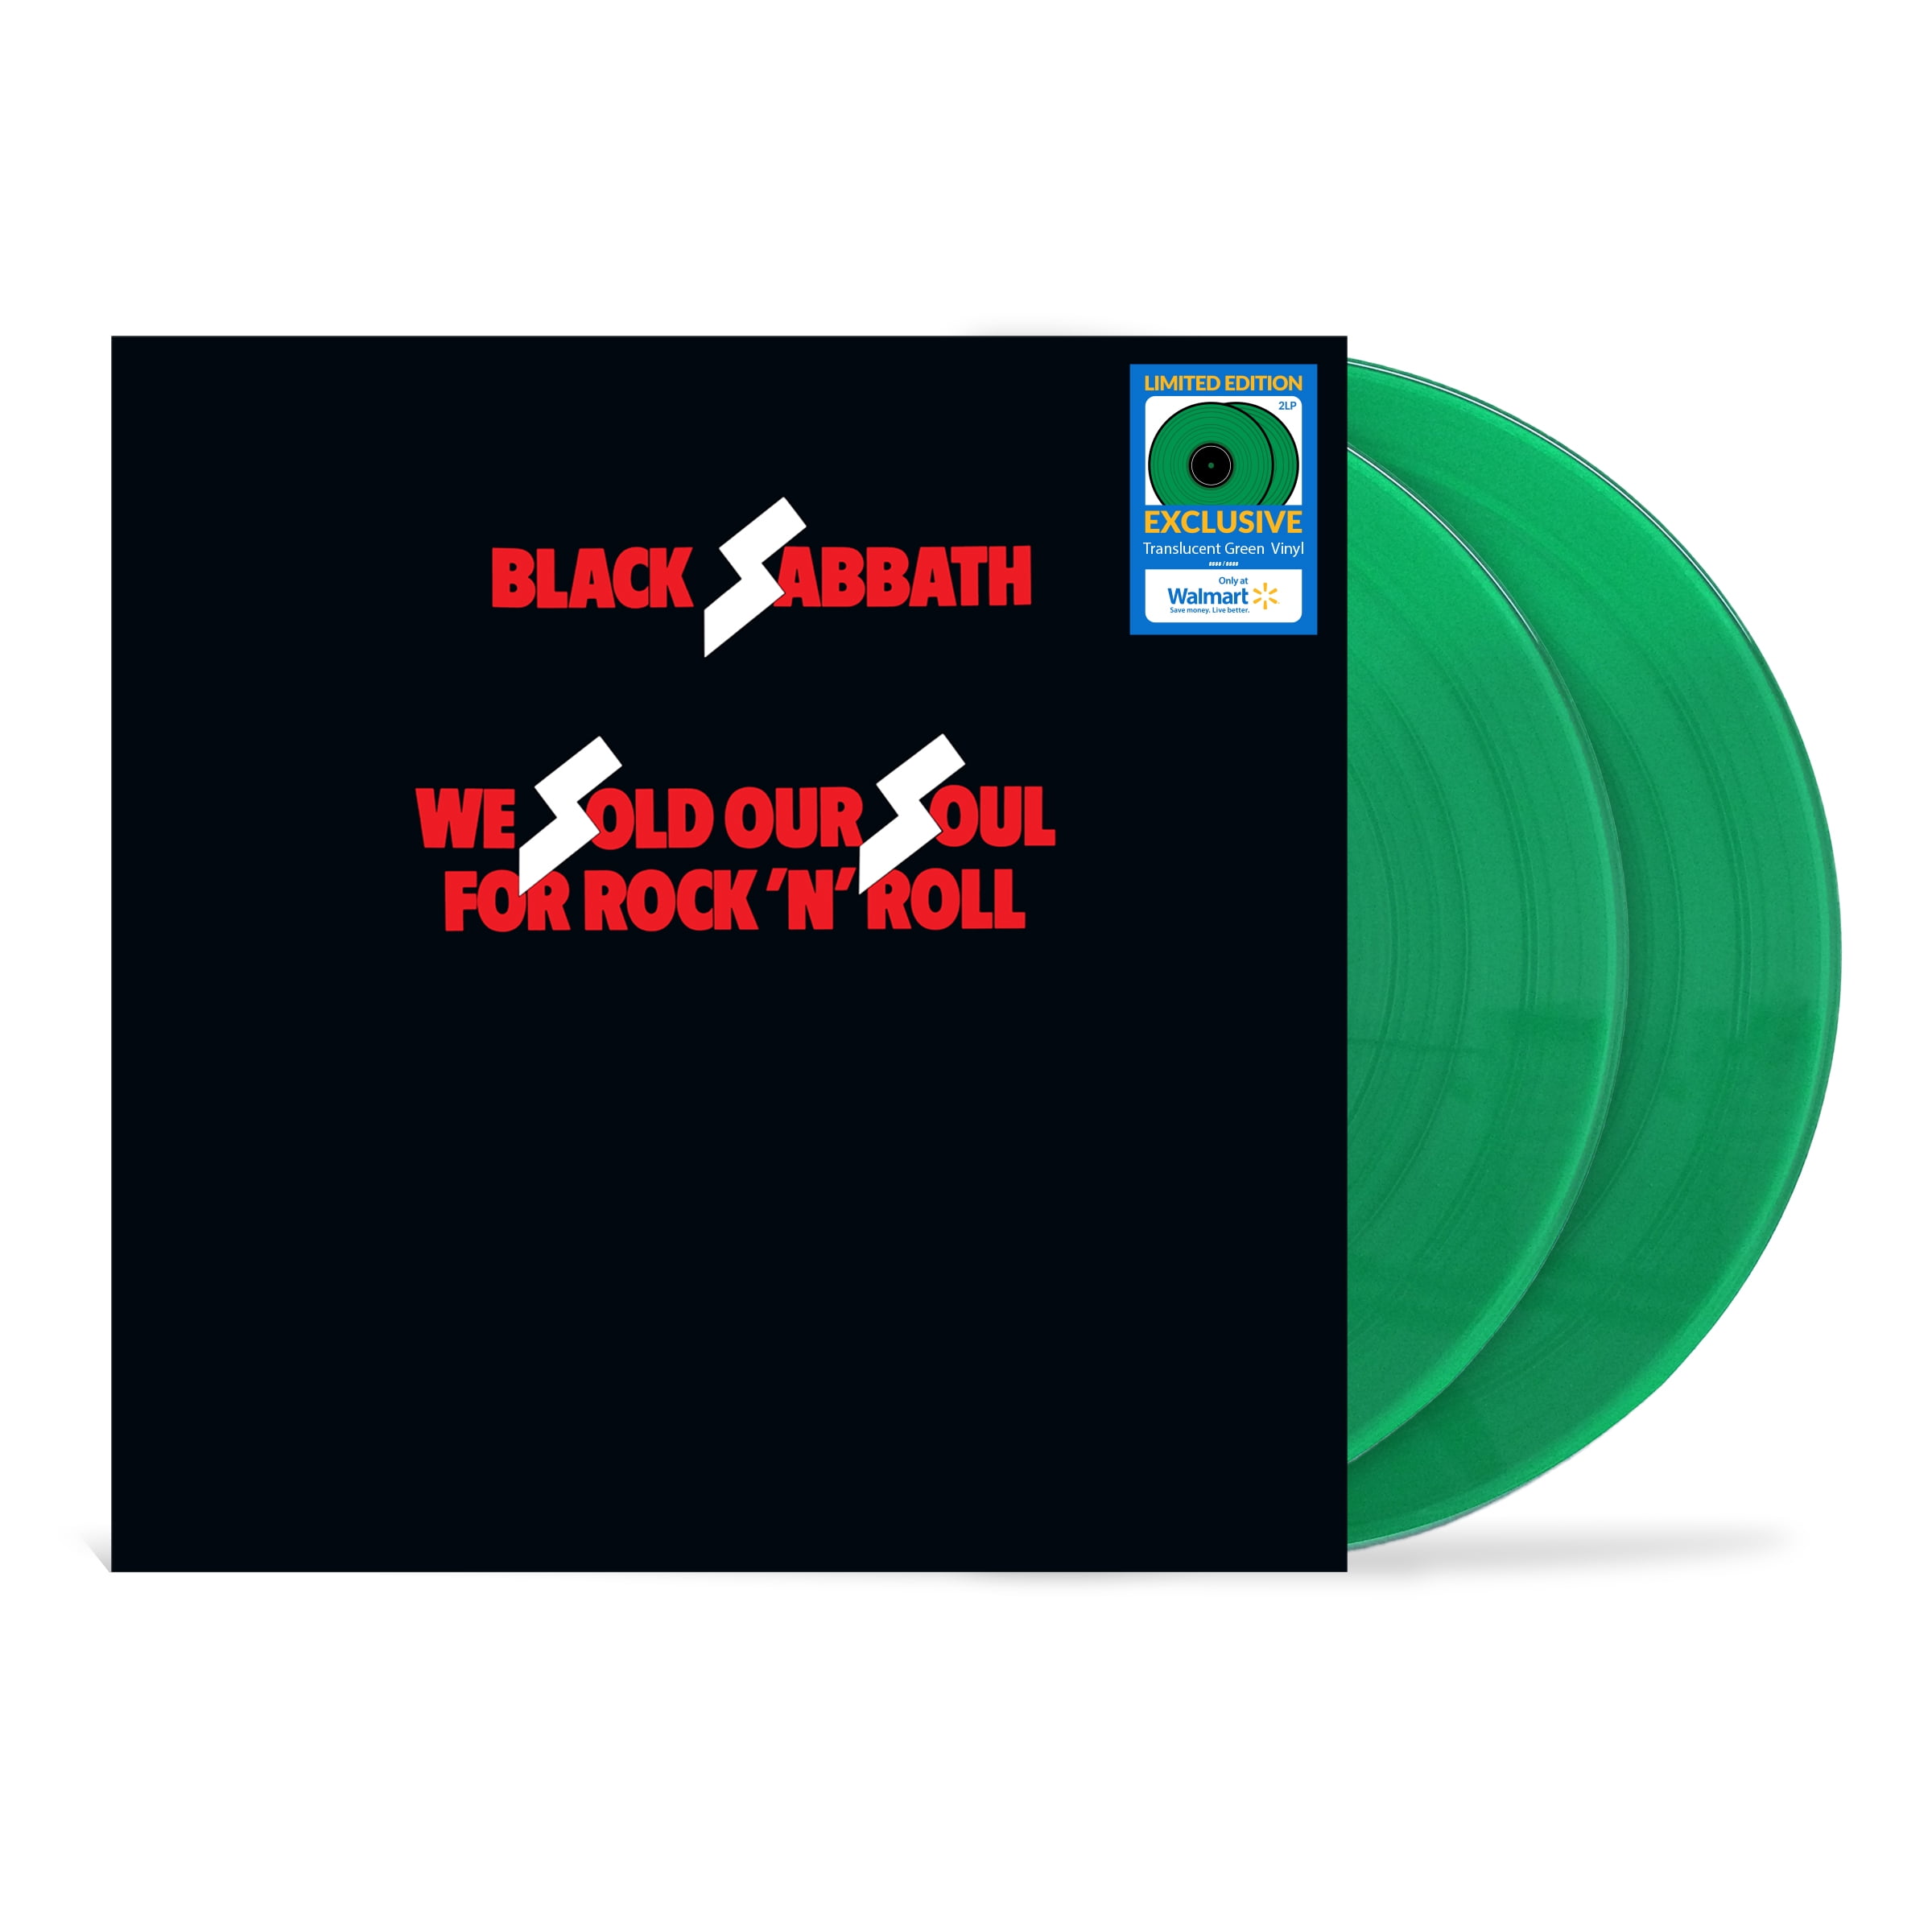 Black Sabbath - We Sold Our Soul For Rock N Roll (Walmart Exclusive) -  Translucent Green Vinyl LP (Rhino)